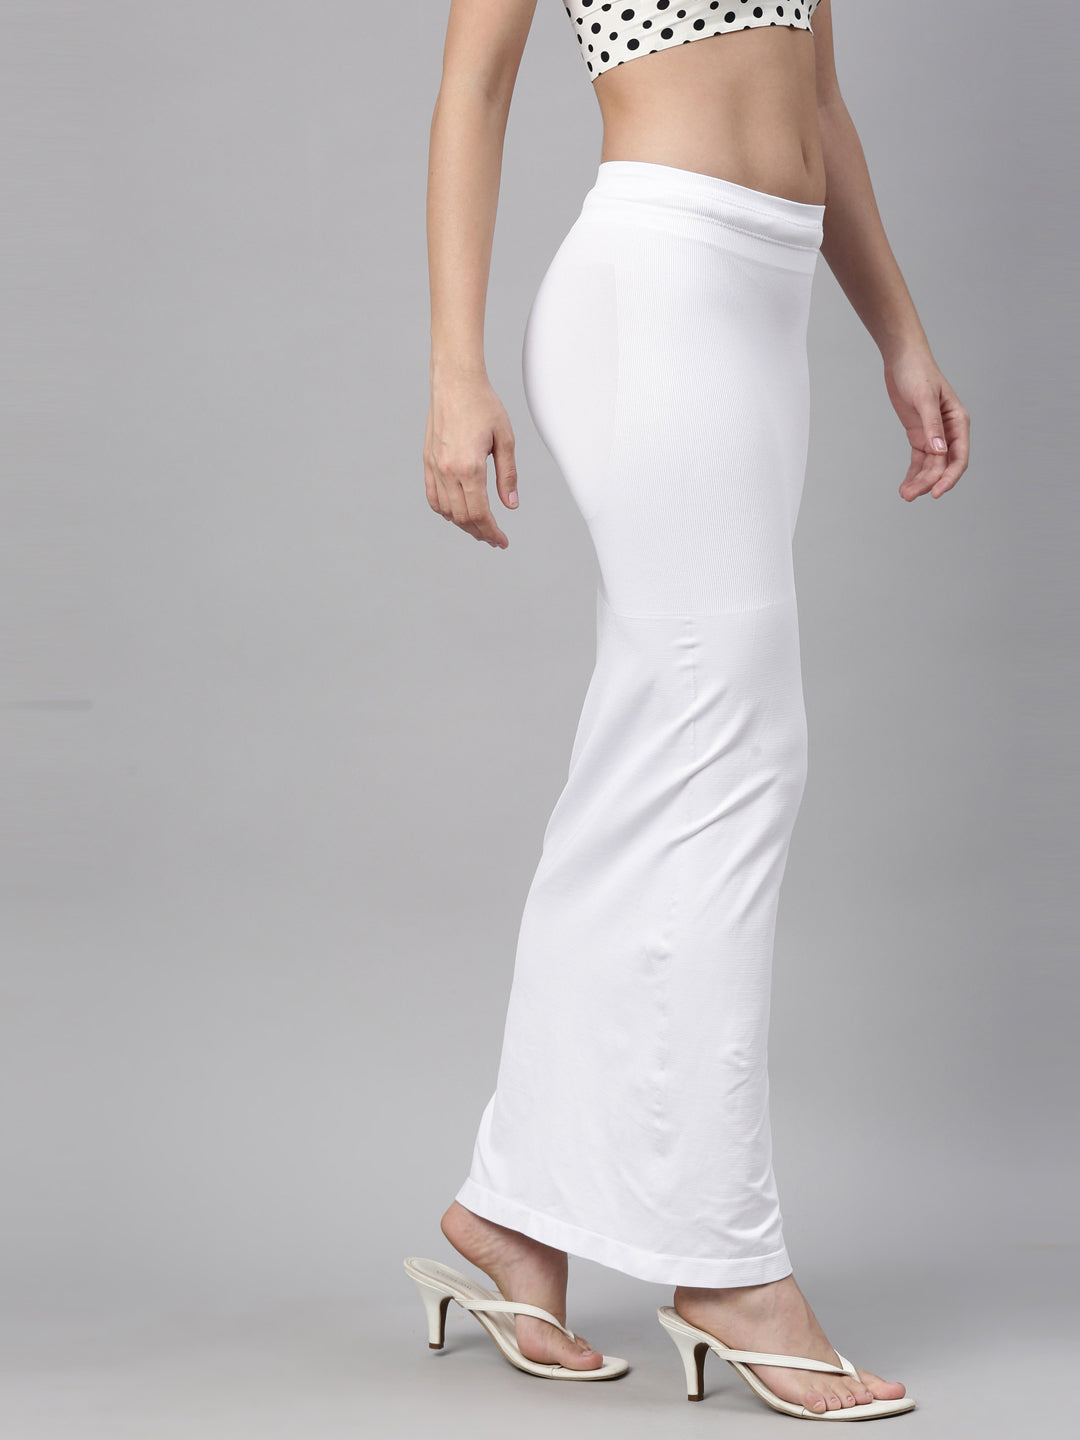 Piatrends Womens Seamless White Saree Shapewear